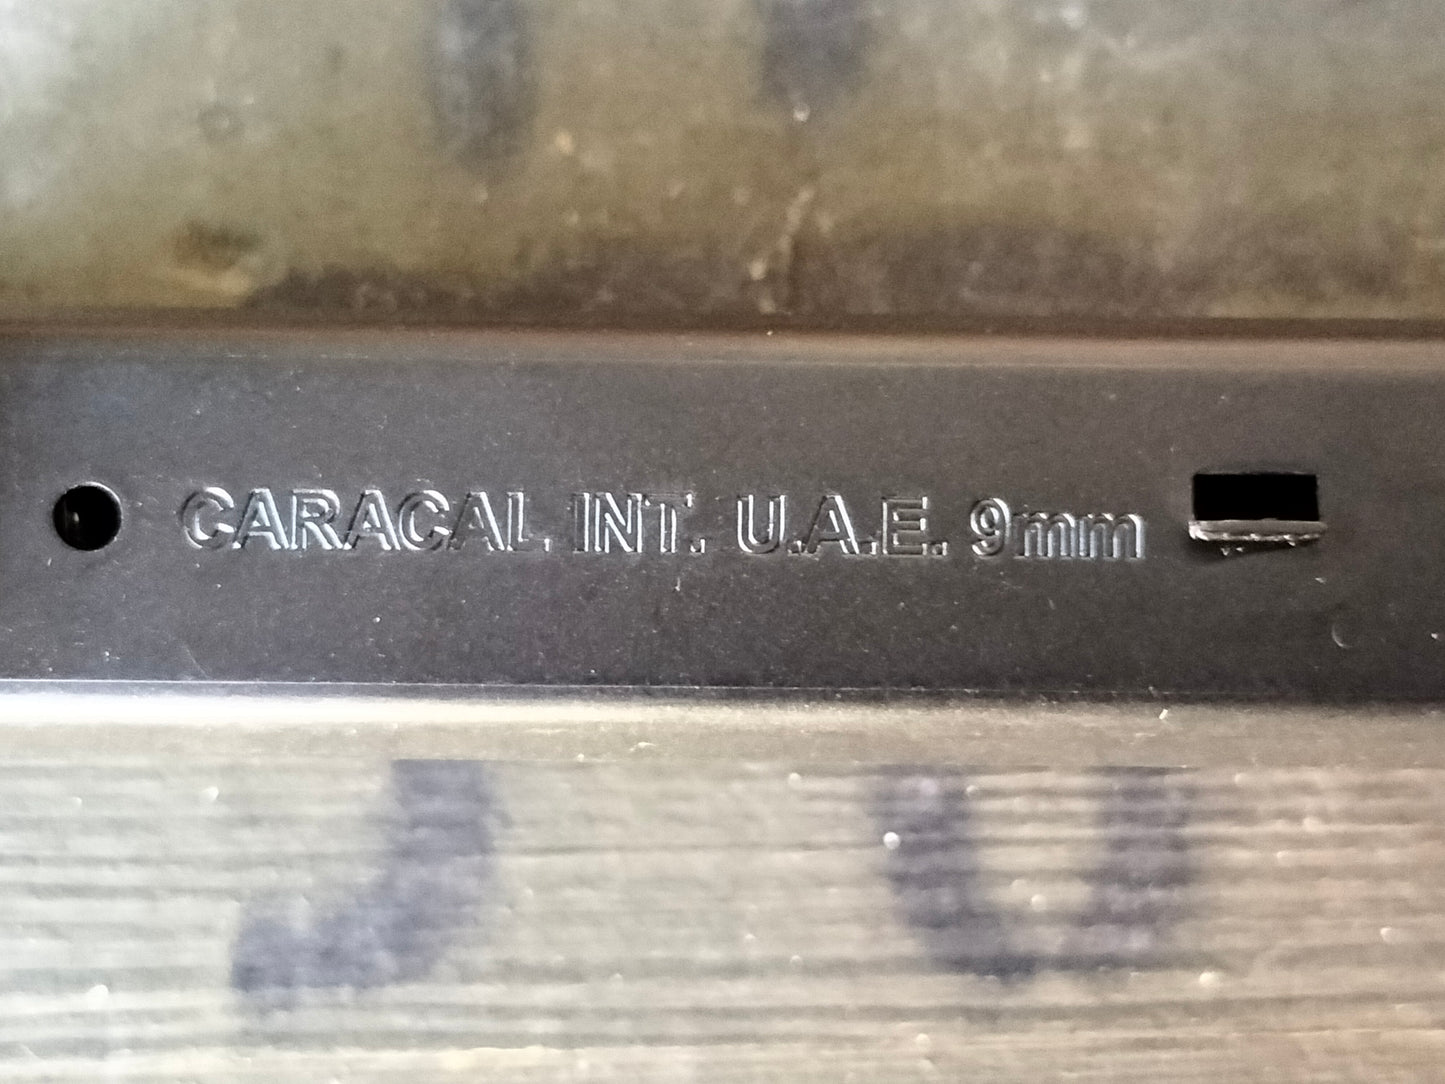 Caricatore Caracal - 9 mm